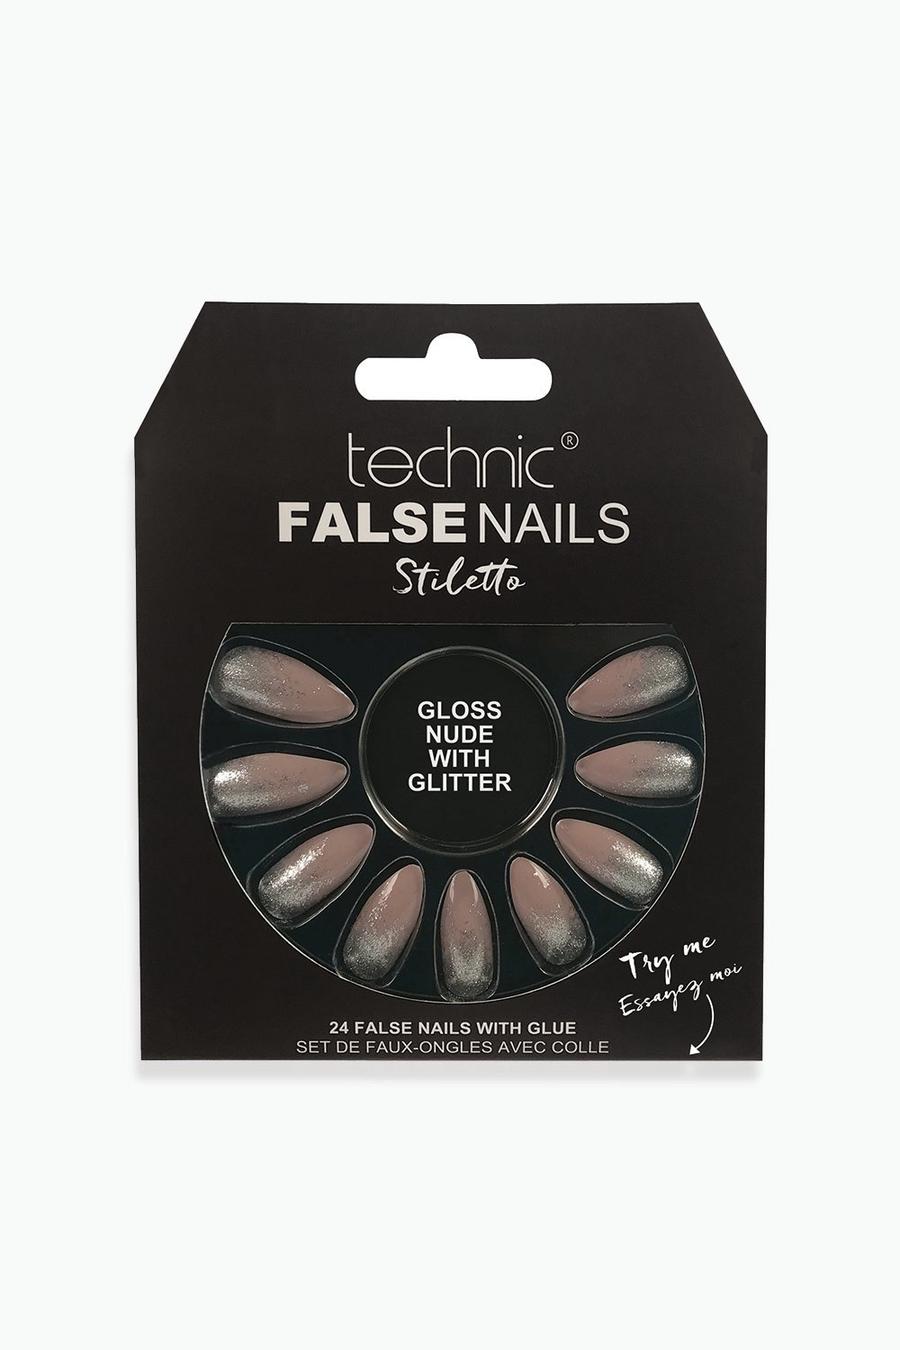 Technic - Faux ongles pailletés - Stiletto Gloss, Nude image number 1